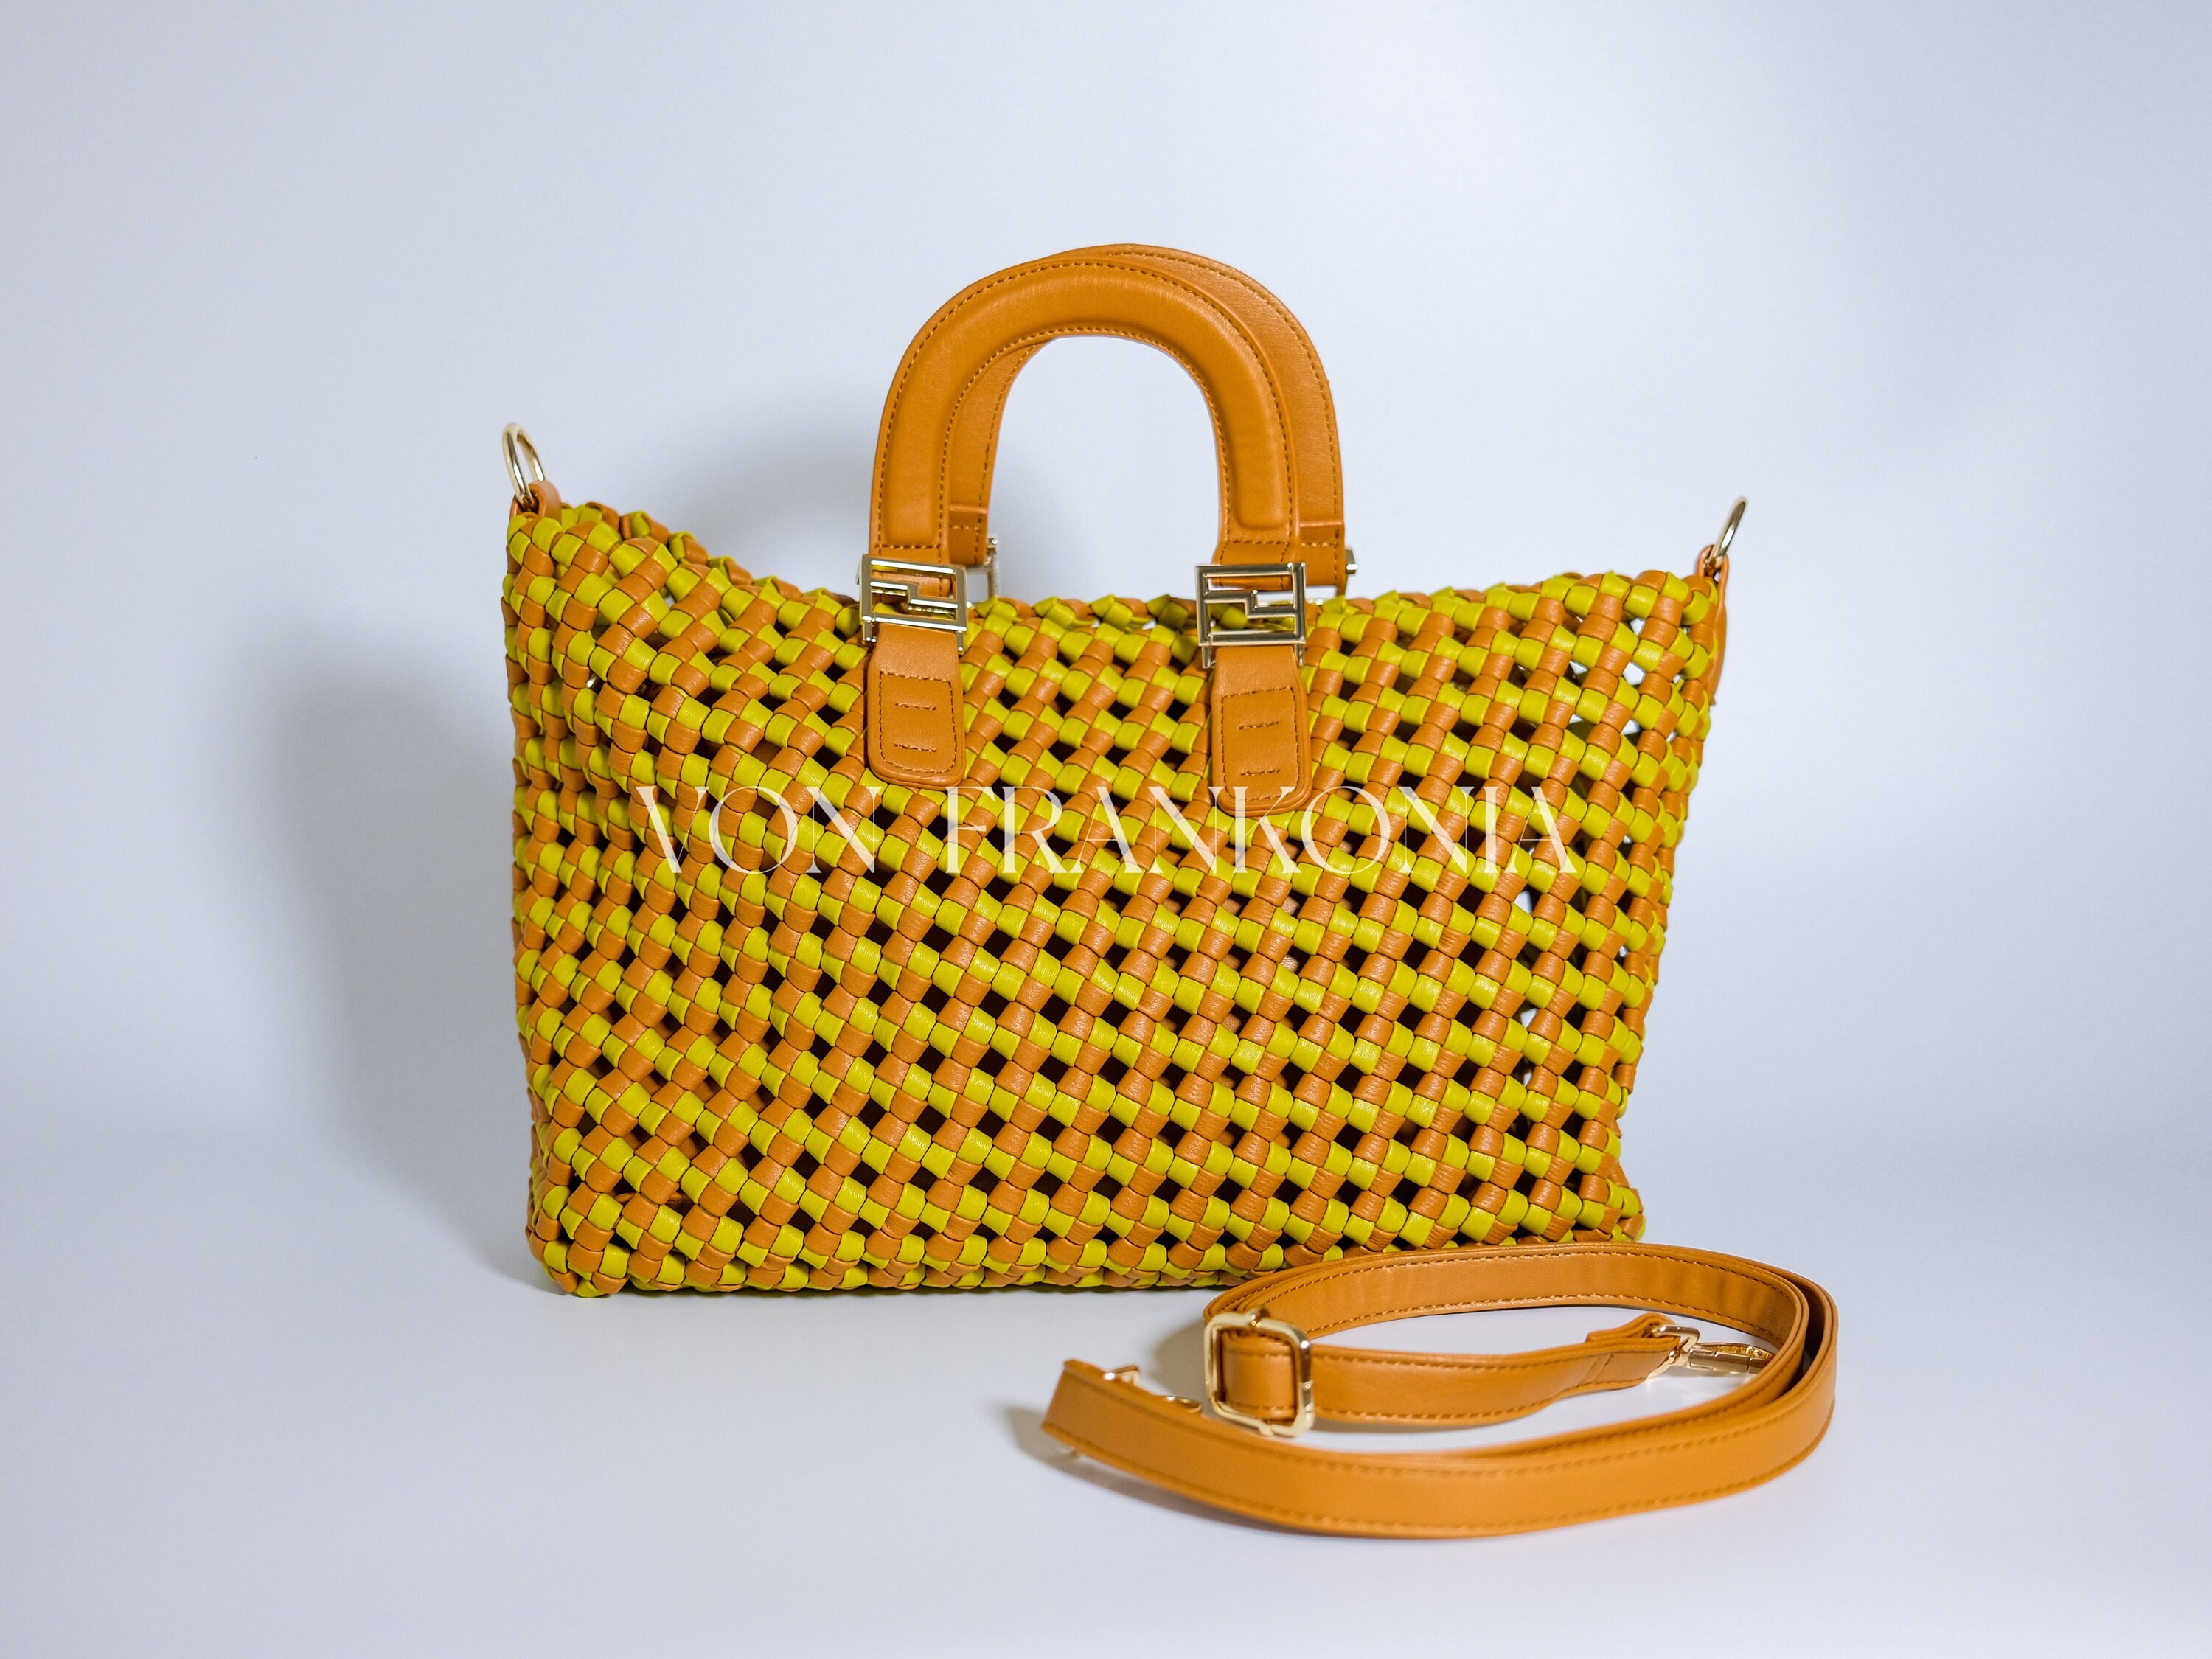 New Amazing Hermès Kelly 25 Handbag Strap in Etoupe Epsom Leather, GHW